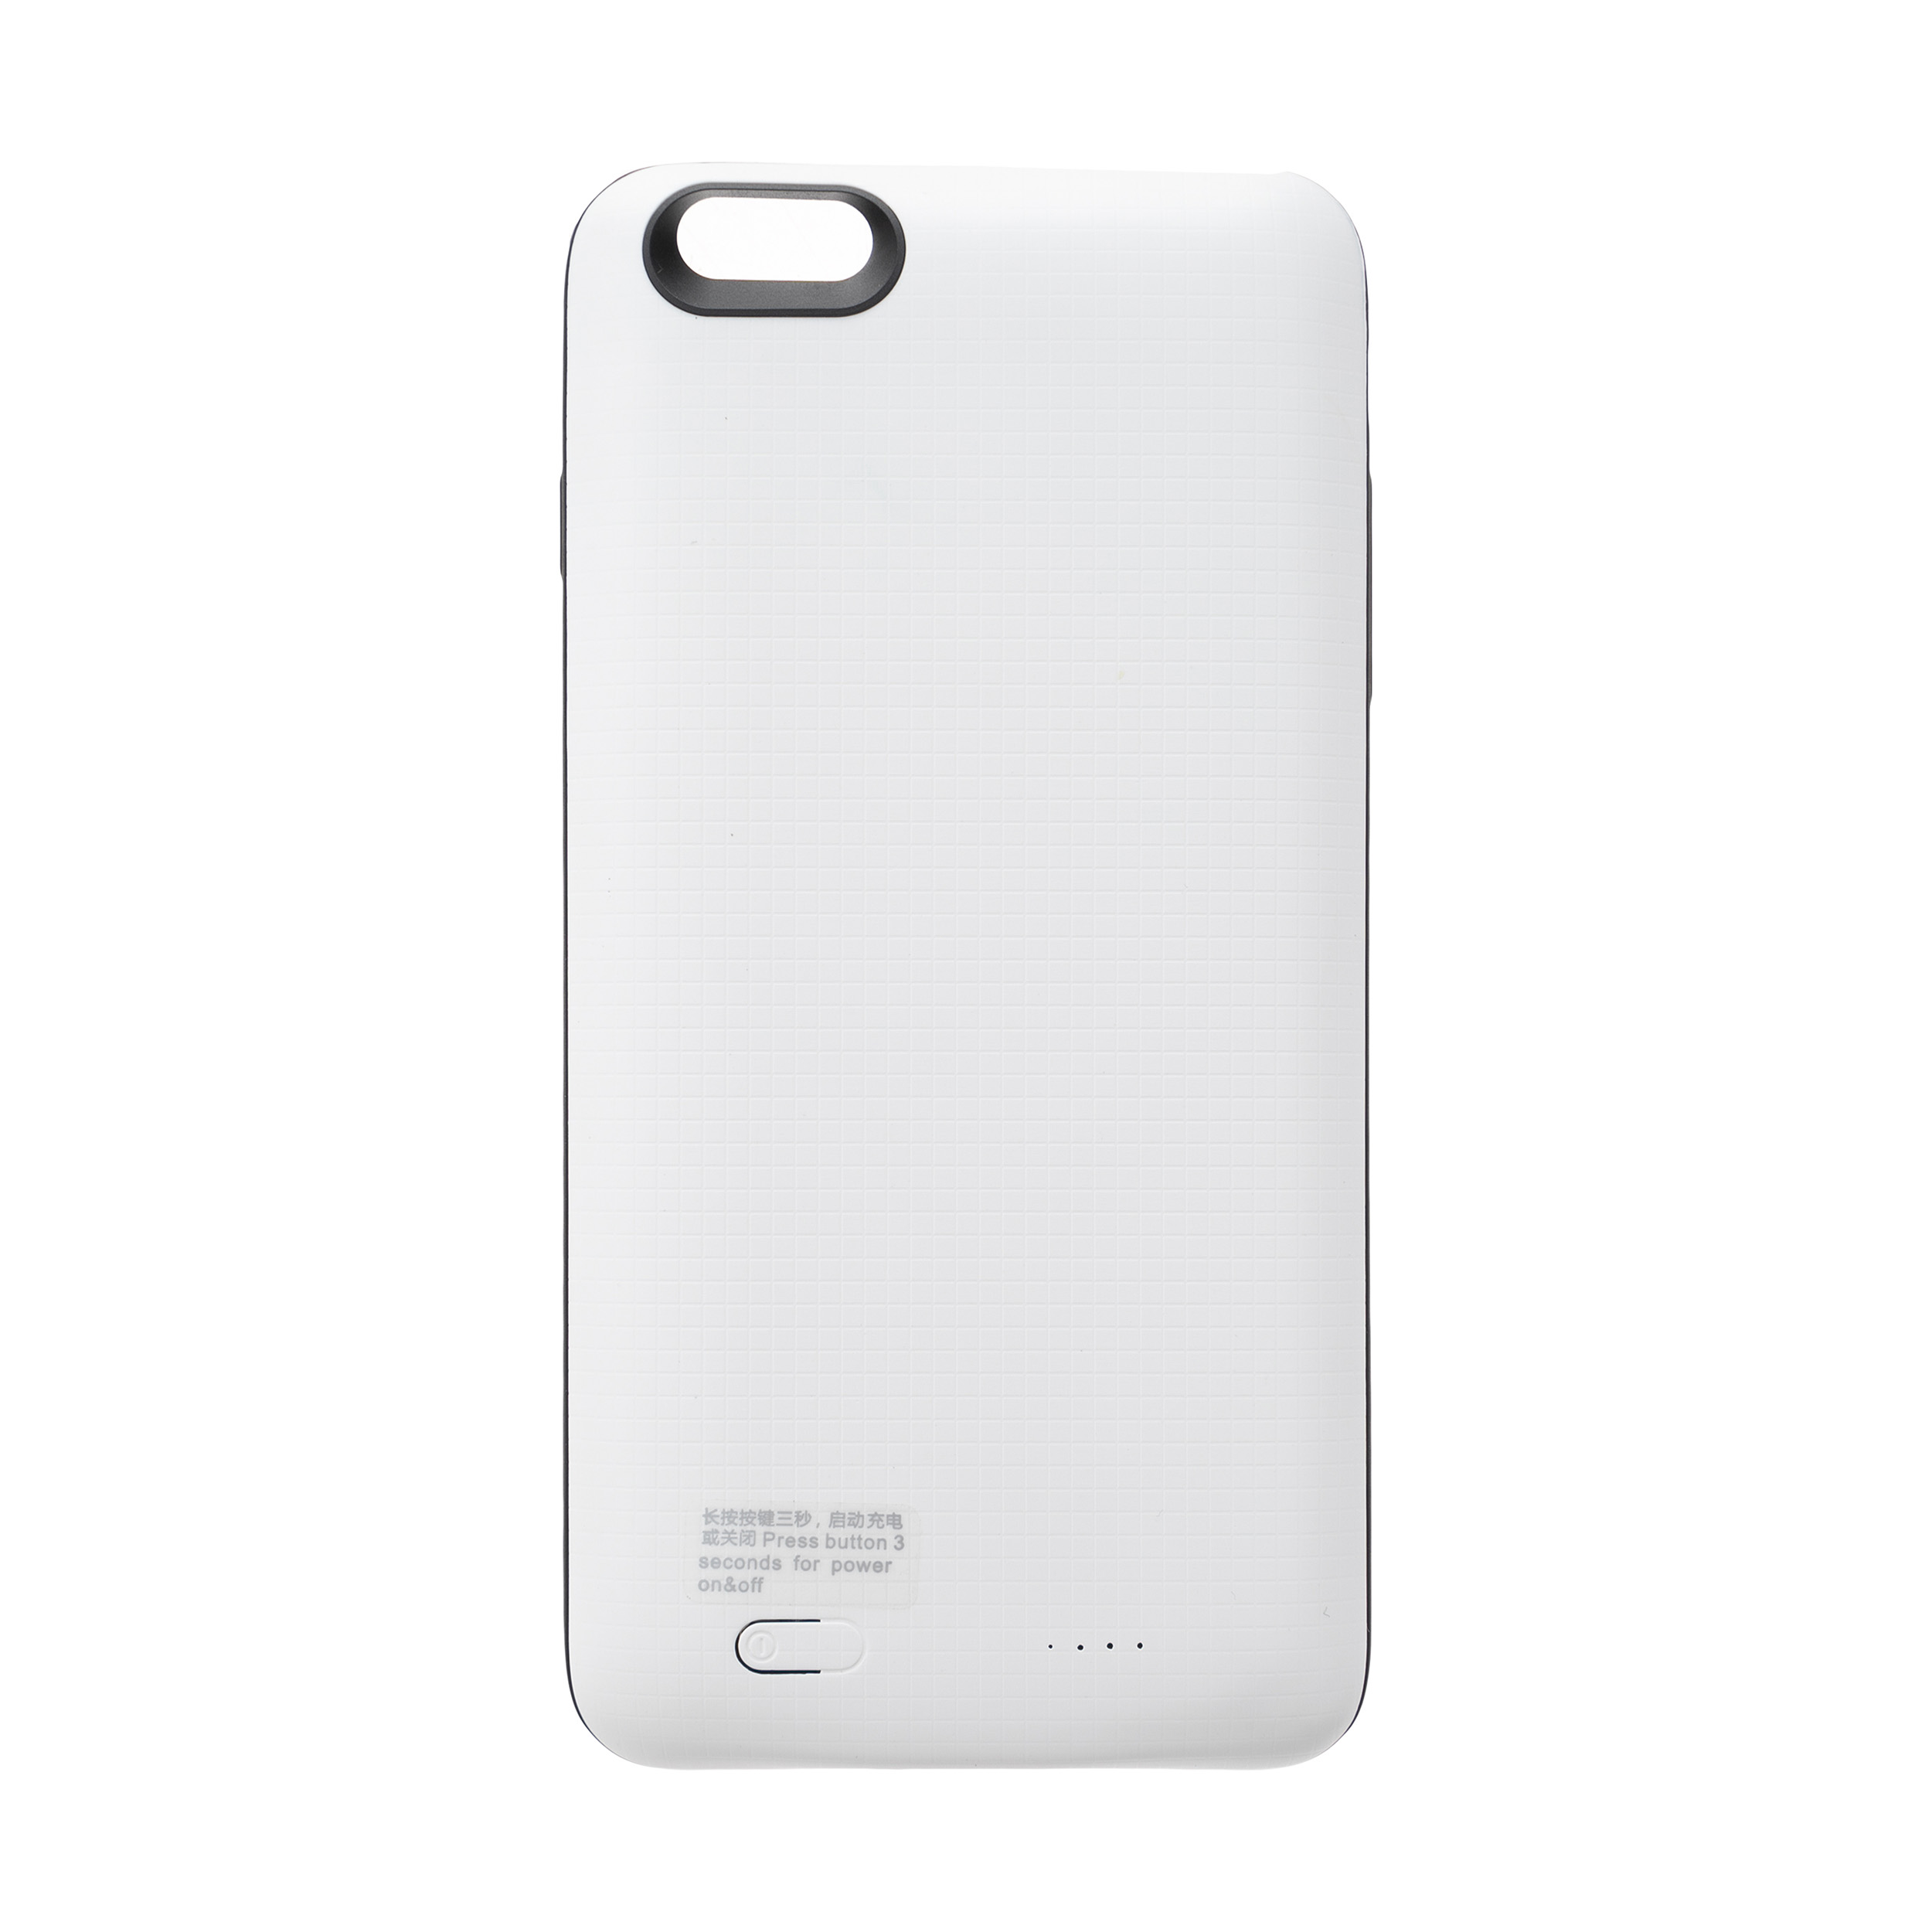 کاور شارژ فلیکسبل مدل C66S ظرفیت 3000 میلی آمپر ساعت مناسب برای گوشی موبایل اپل iPhone 6 / 6s